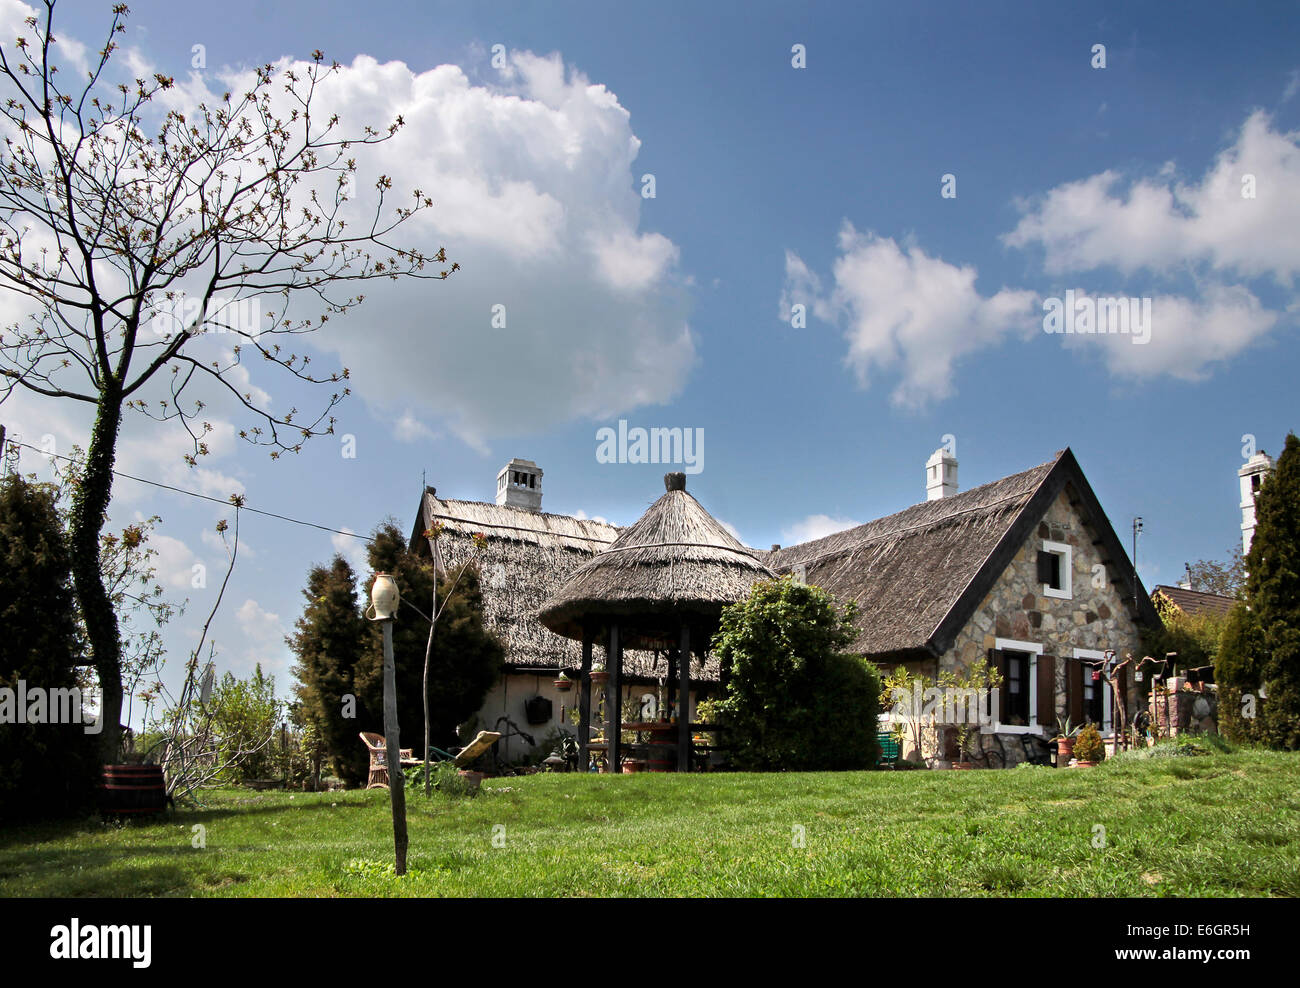 Old farmhouse in Aszofoe at Lake Balaton, Hungary Stock Photo